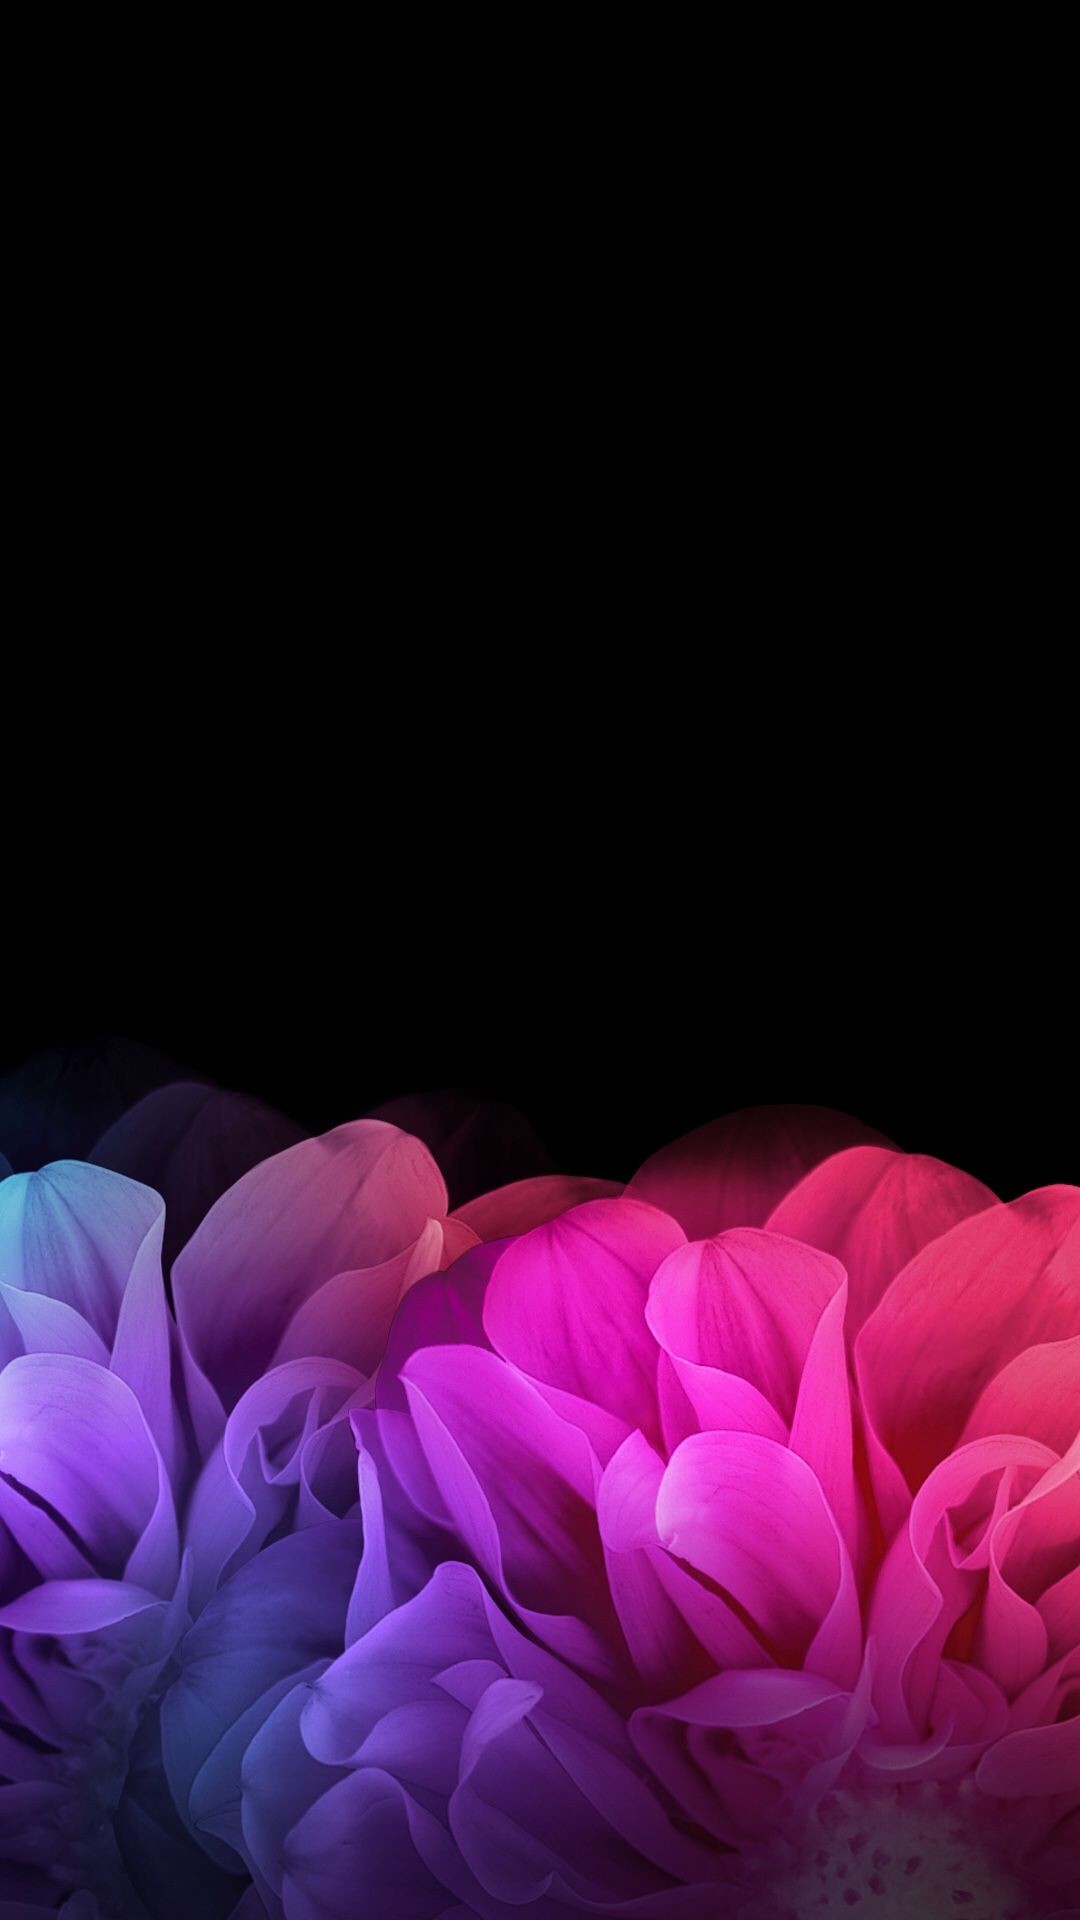 1080x1920 Black Floral iPhone Wallpaper